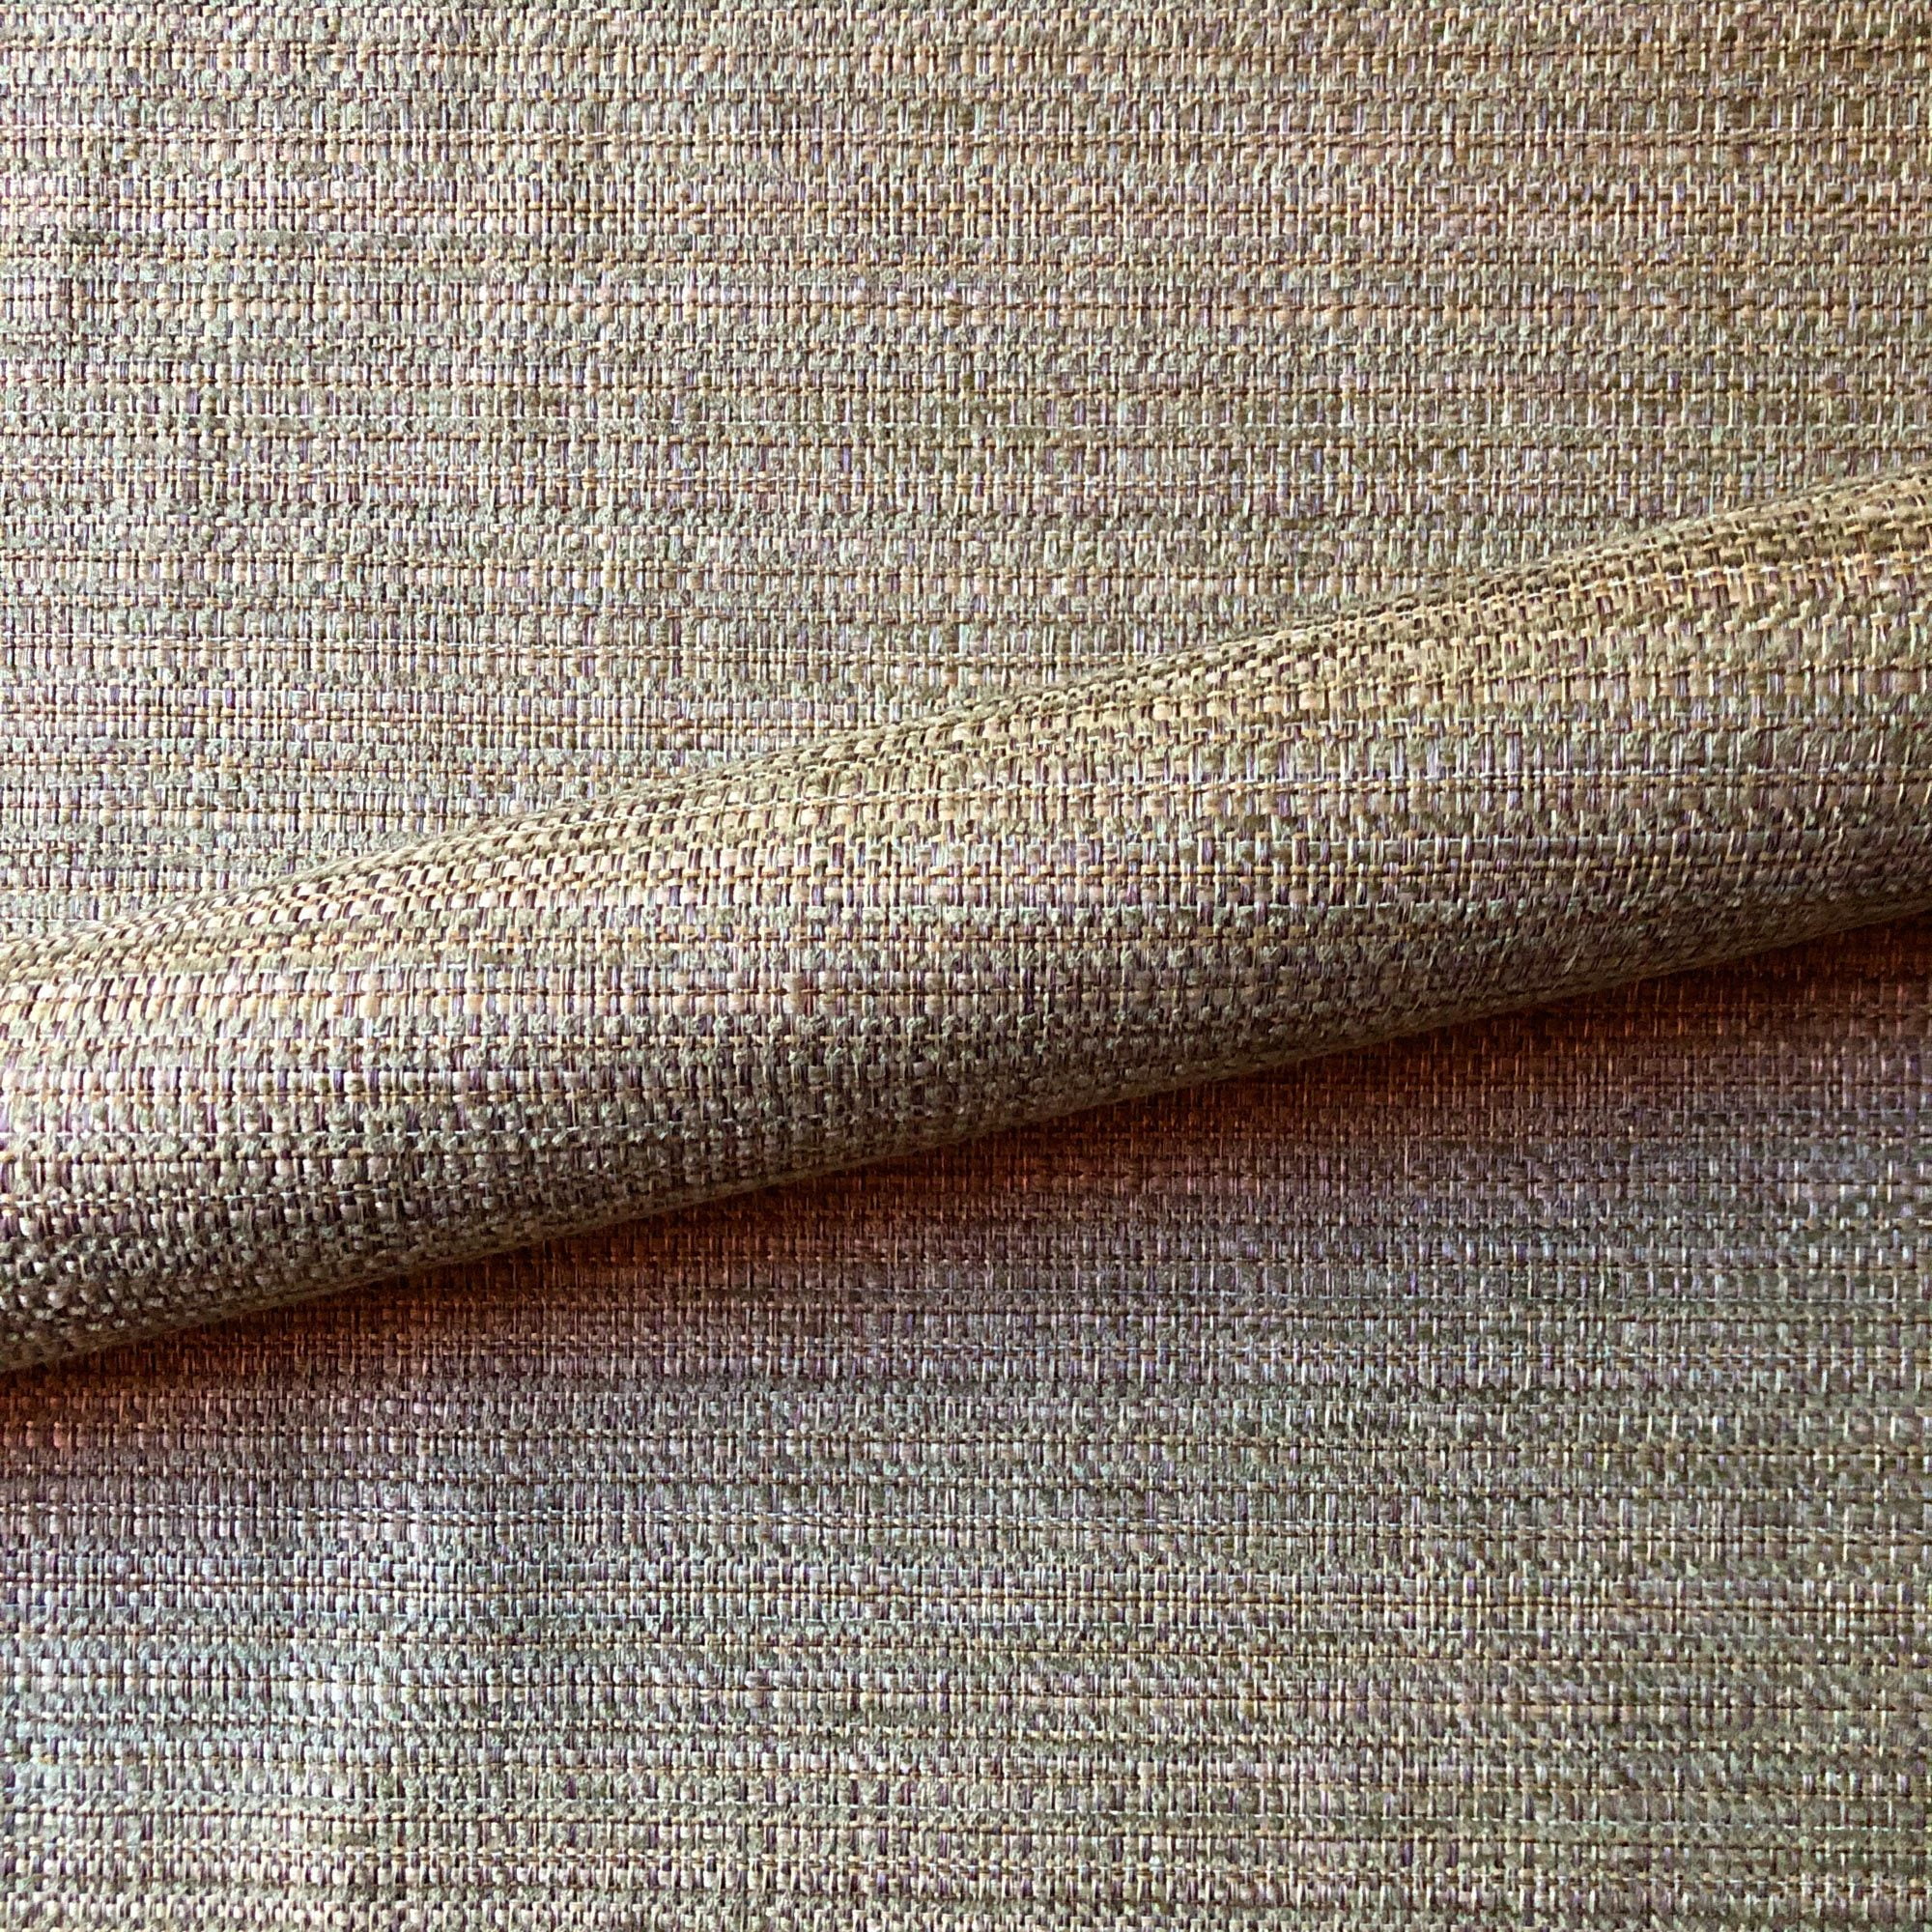 Woven Large Lattice Trellis Cream & Taupe Textured Upholstery Fabric 